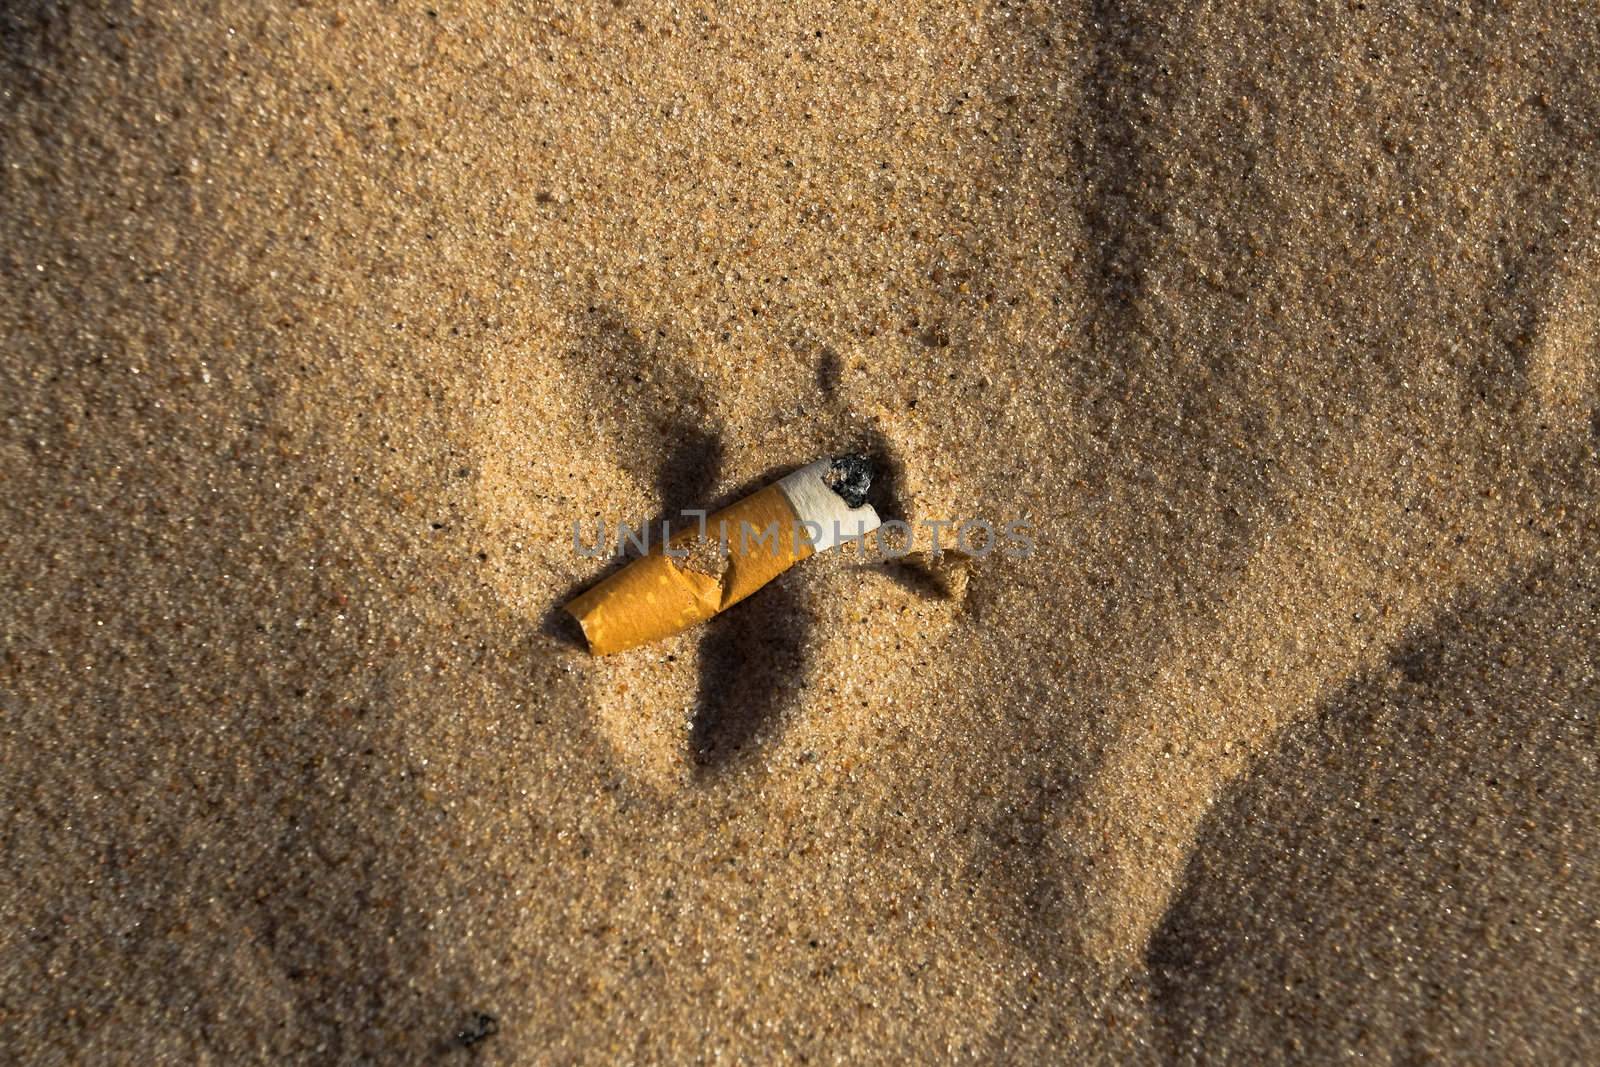 Cigarette butt in sand. Litter on the beach